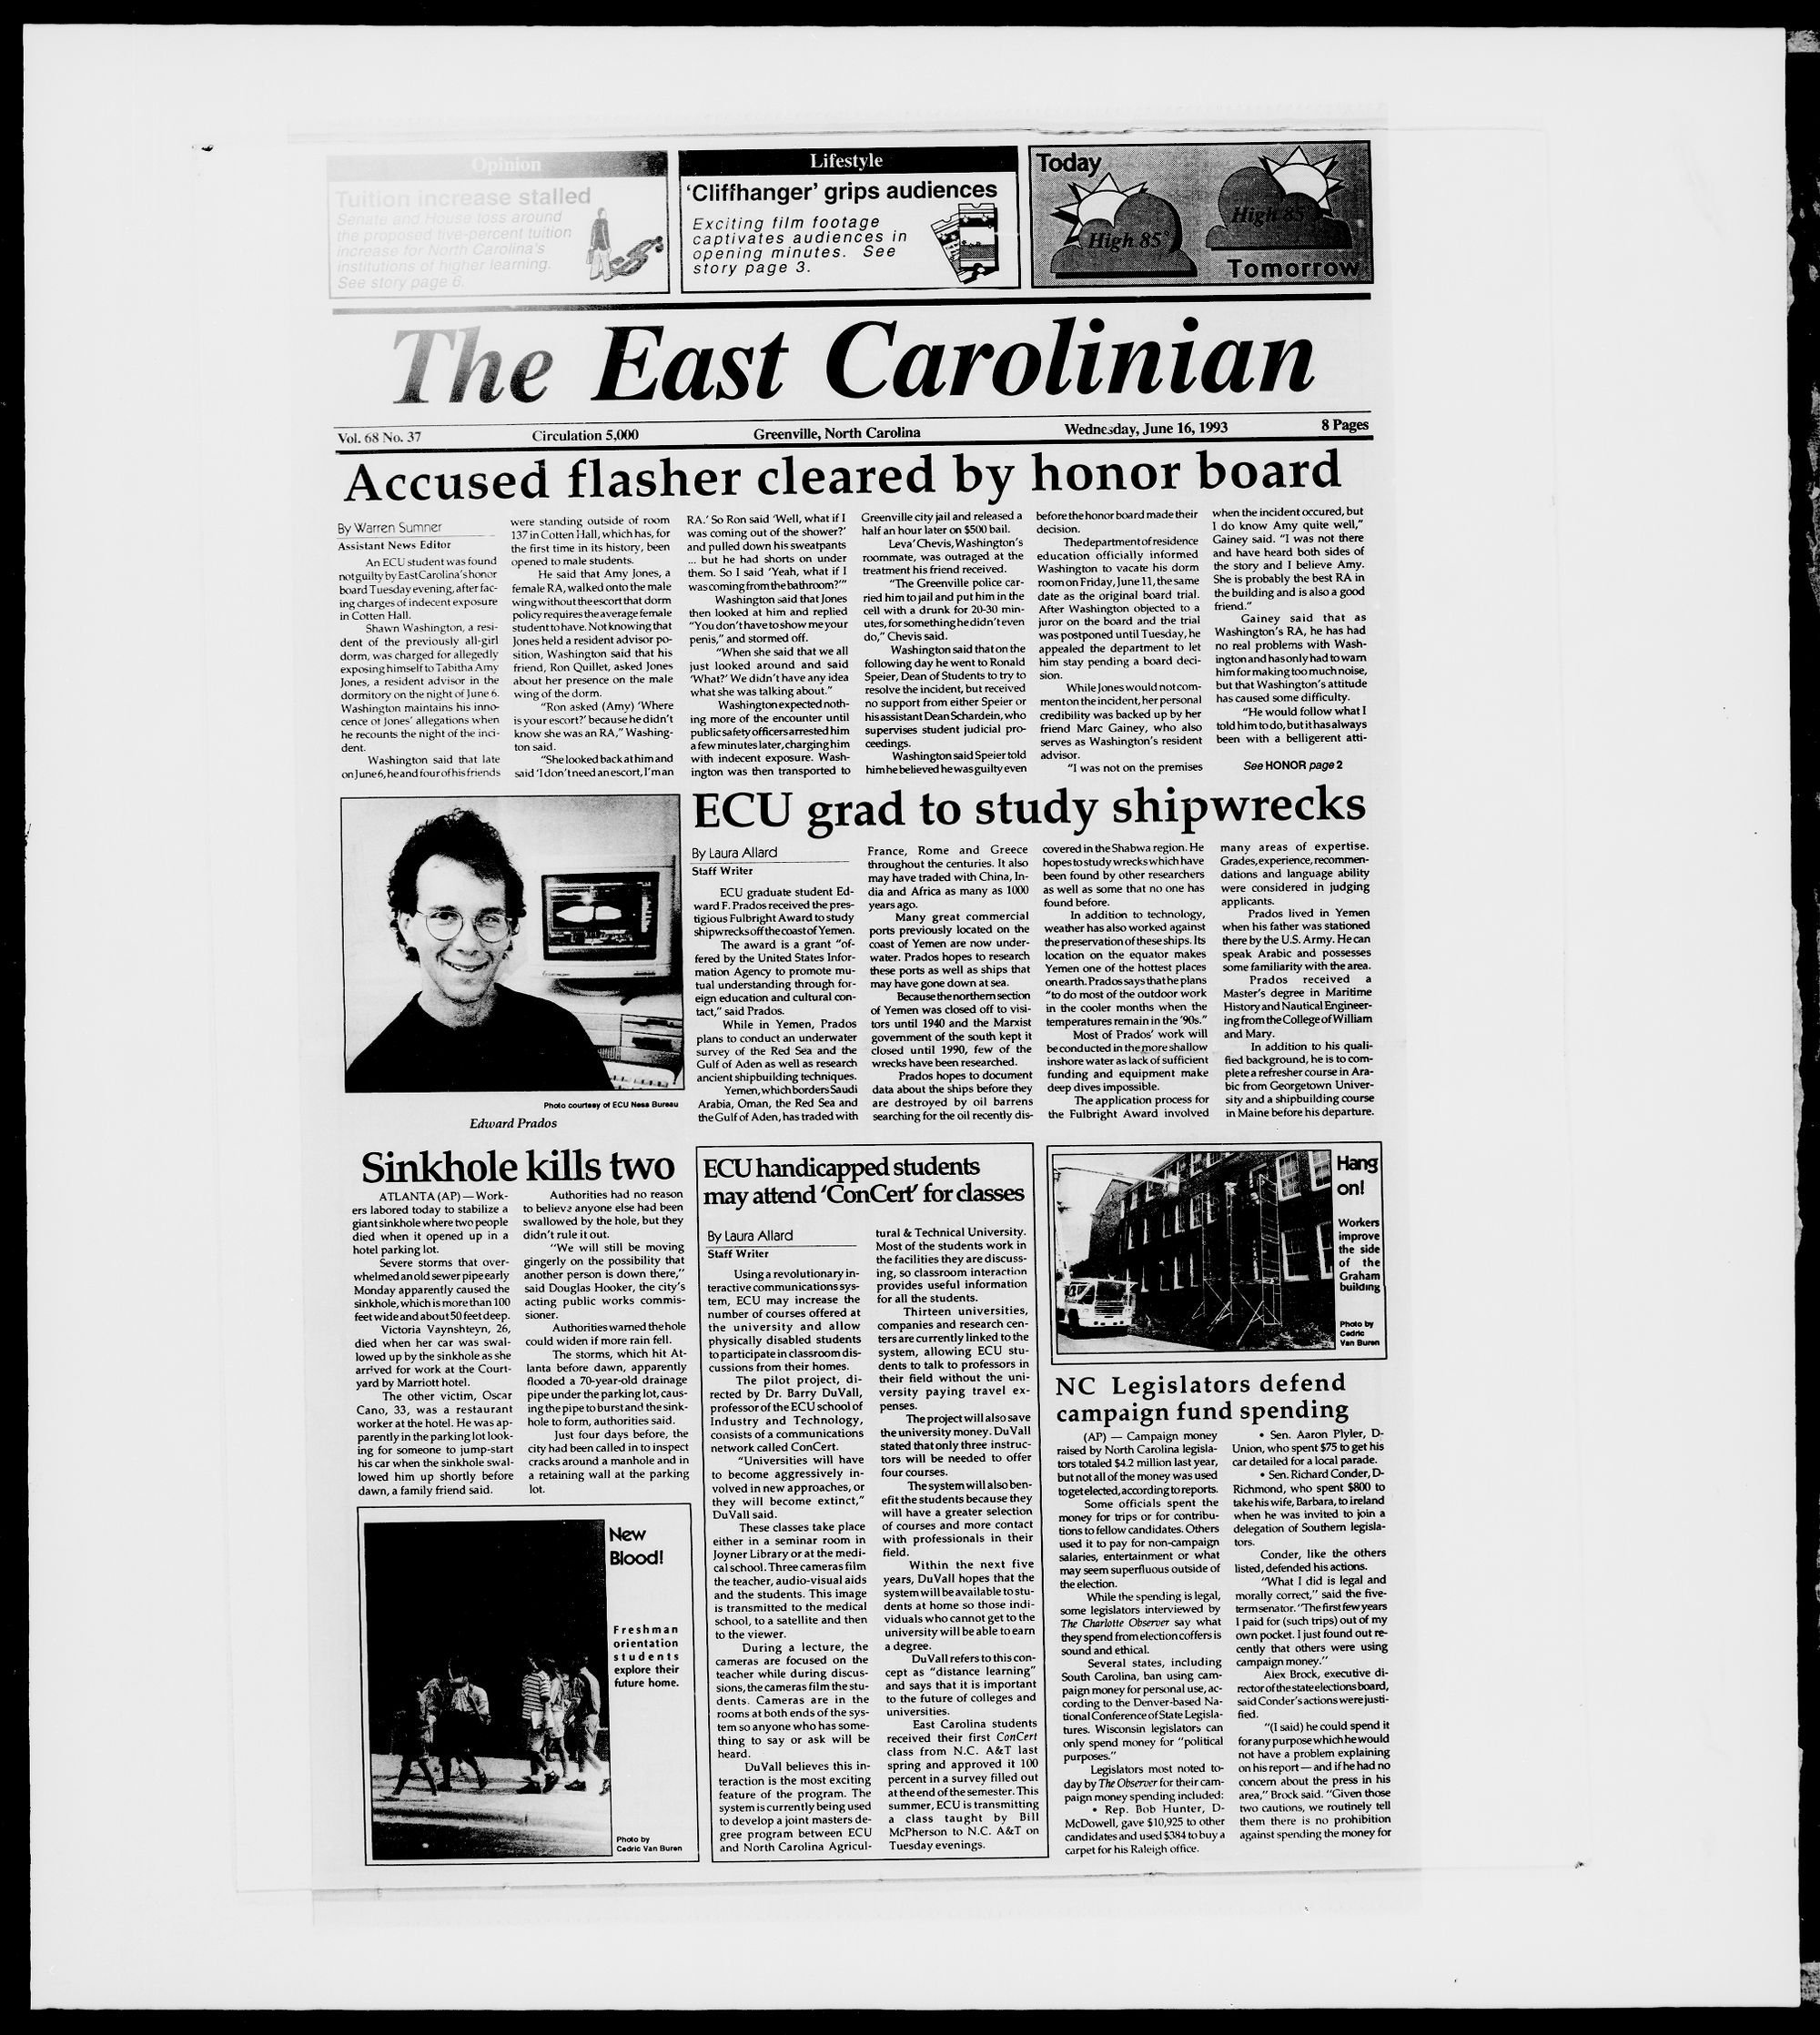 The East Carolinian, June 16, 1993 picture